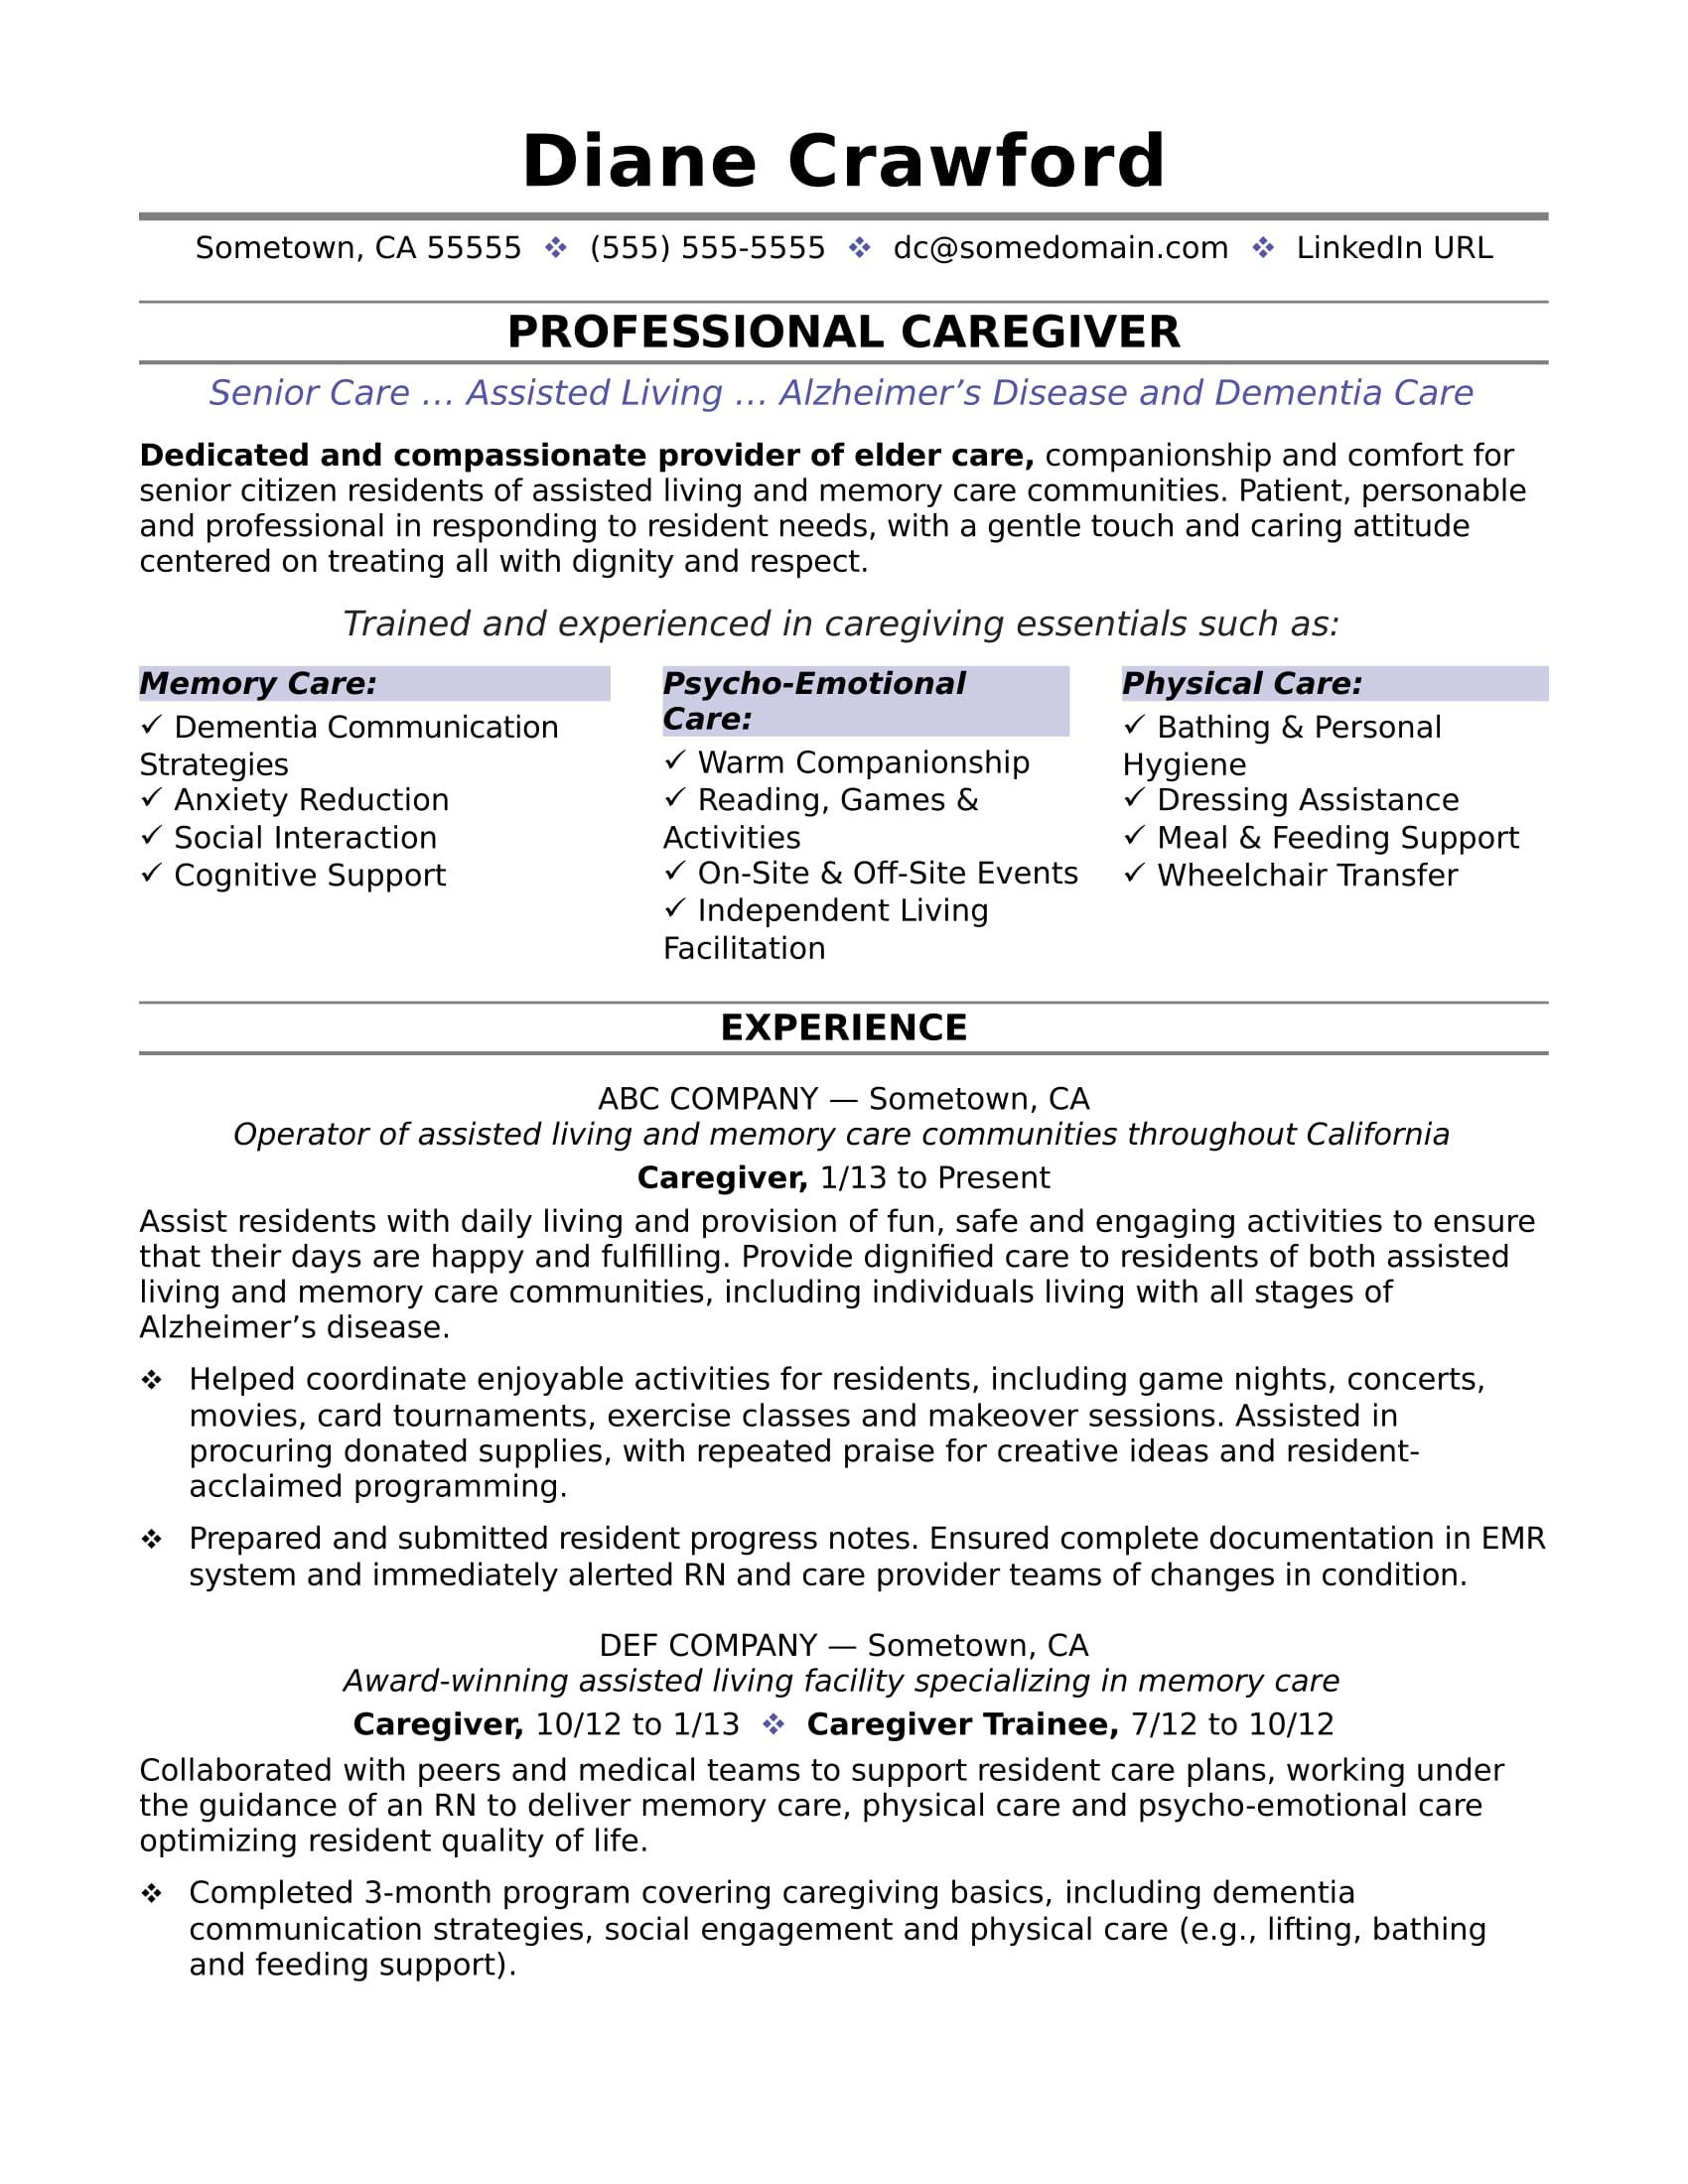 Home Health Care Provider Resume Sample Caregiver Resume Sample Monster.com